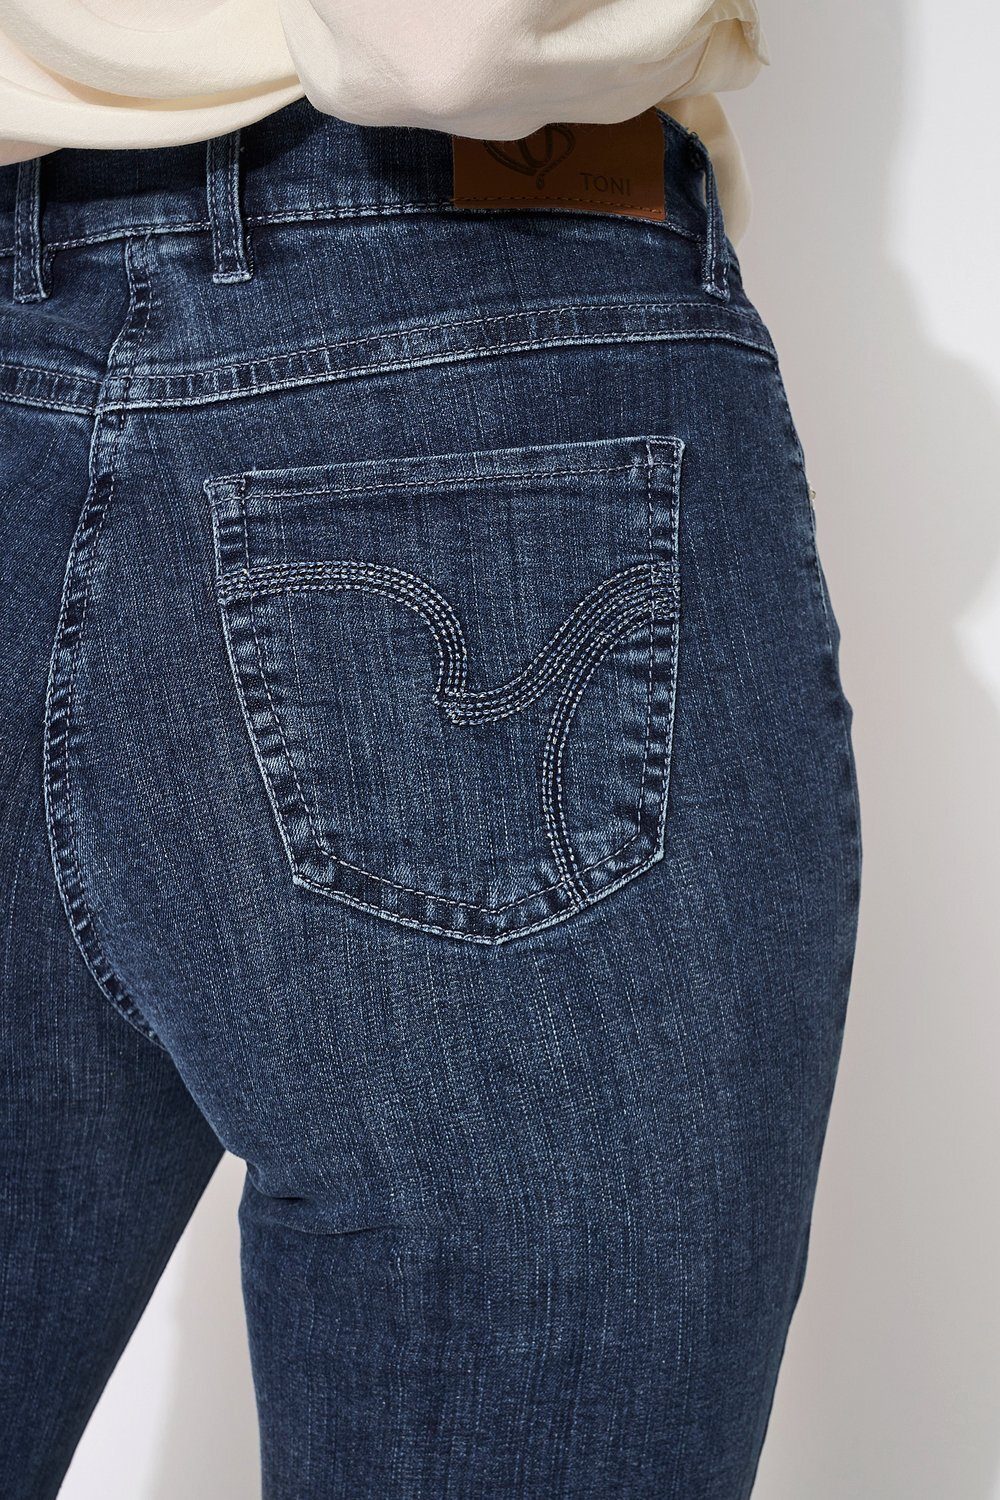 Po 502 Perfect - TONI an Bauch 5-Pocket-Jeans und Shaping-Effekt mittelblau mit Shape